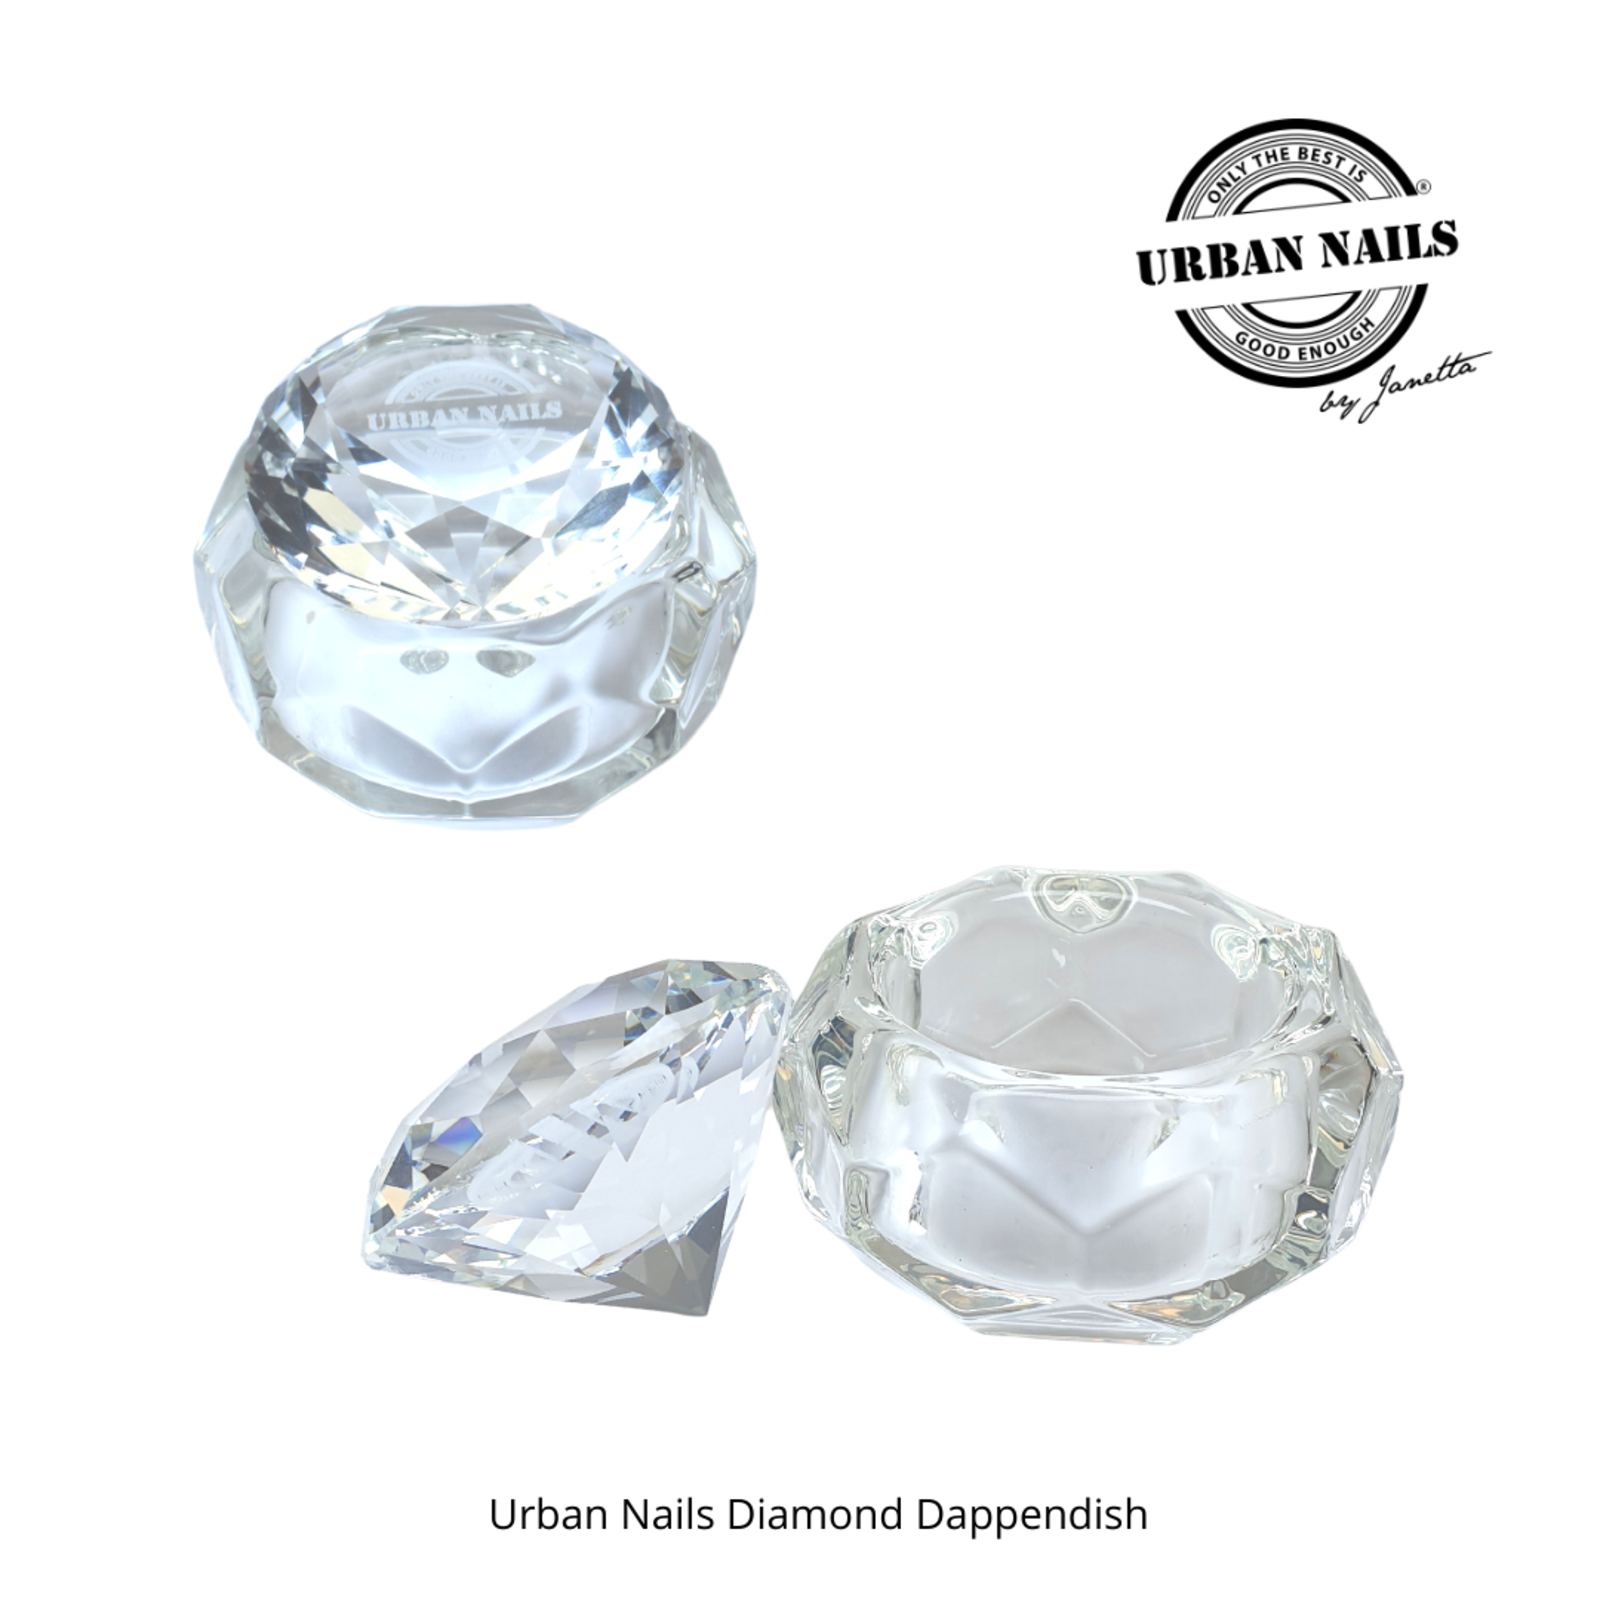 Urban nails Diamond Dappendish